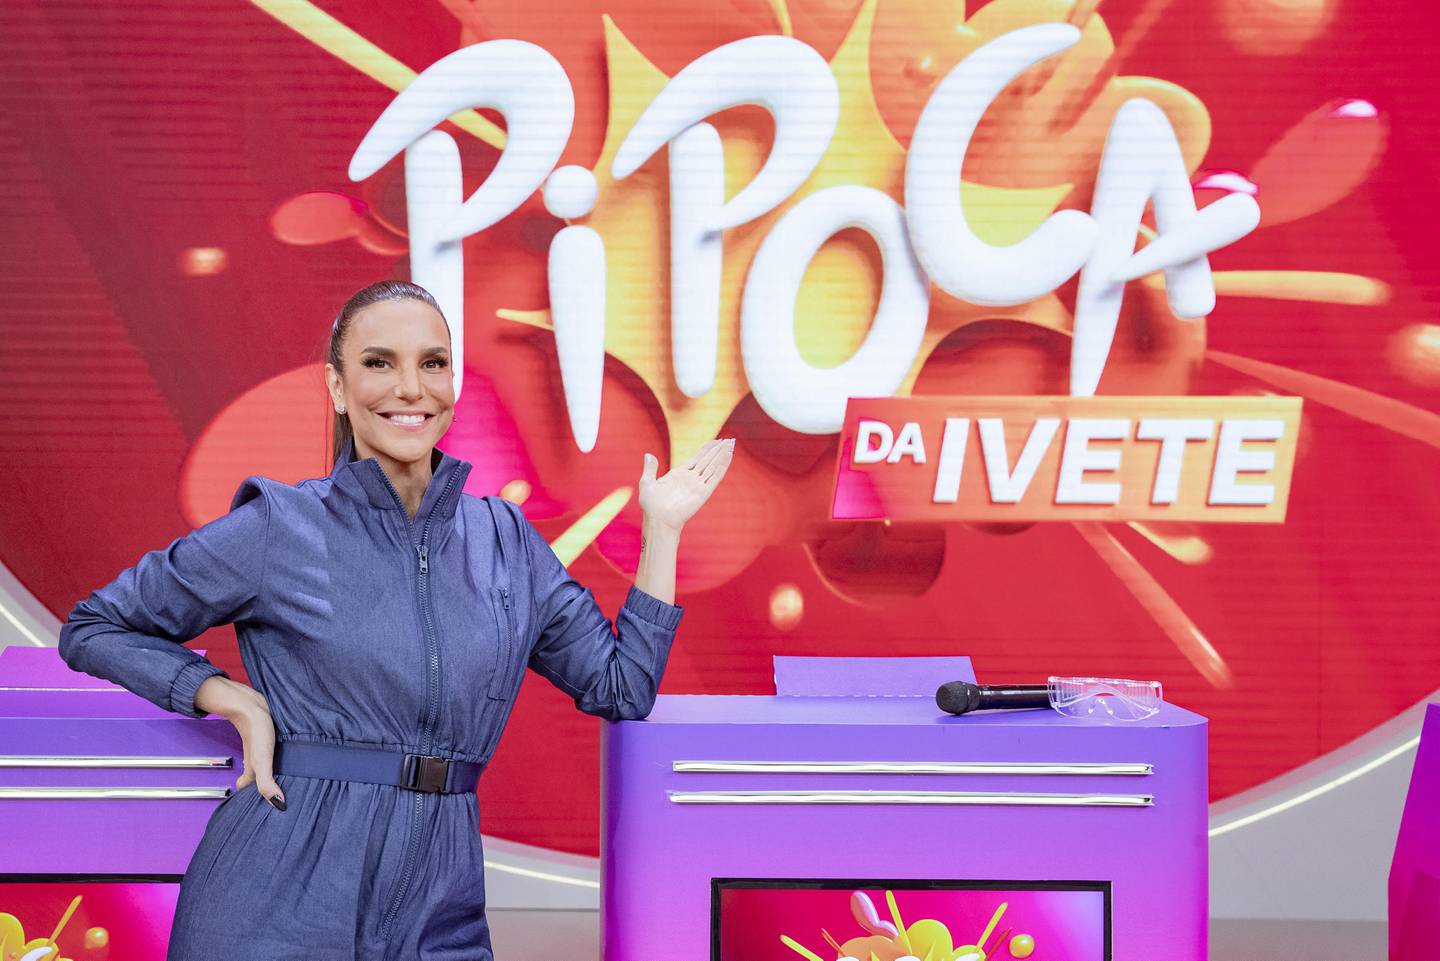 Pipoca: Ivete Sangalo apresenta o seu segundo programa solo na Globo